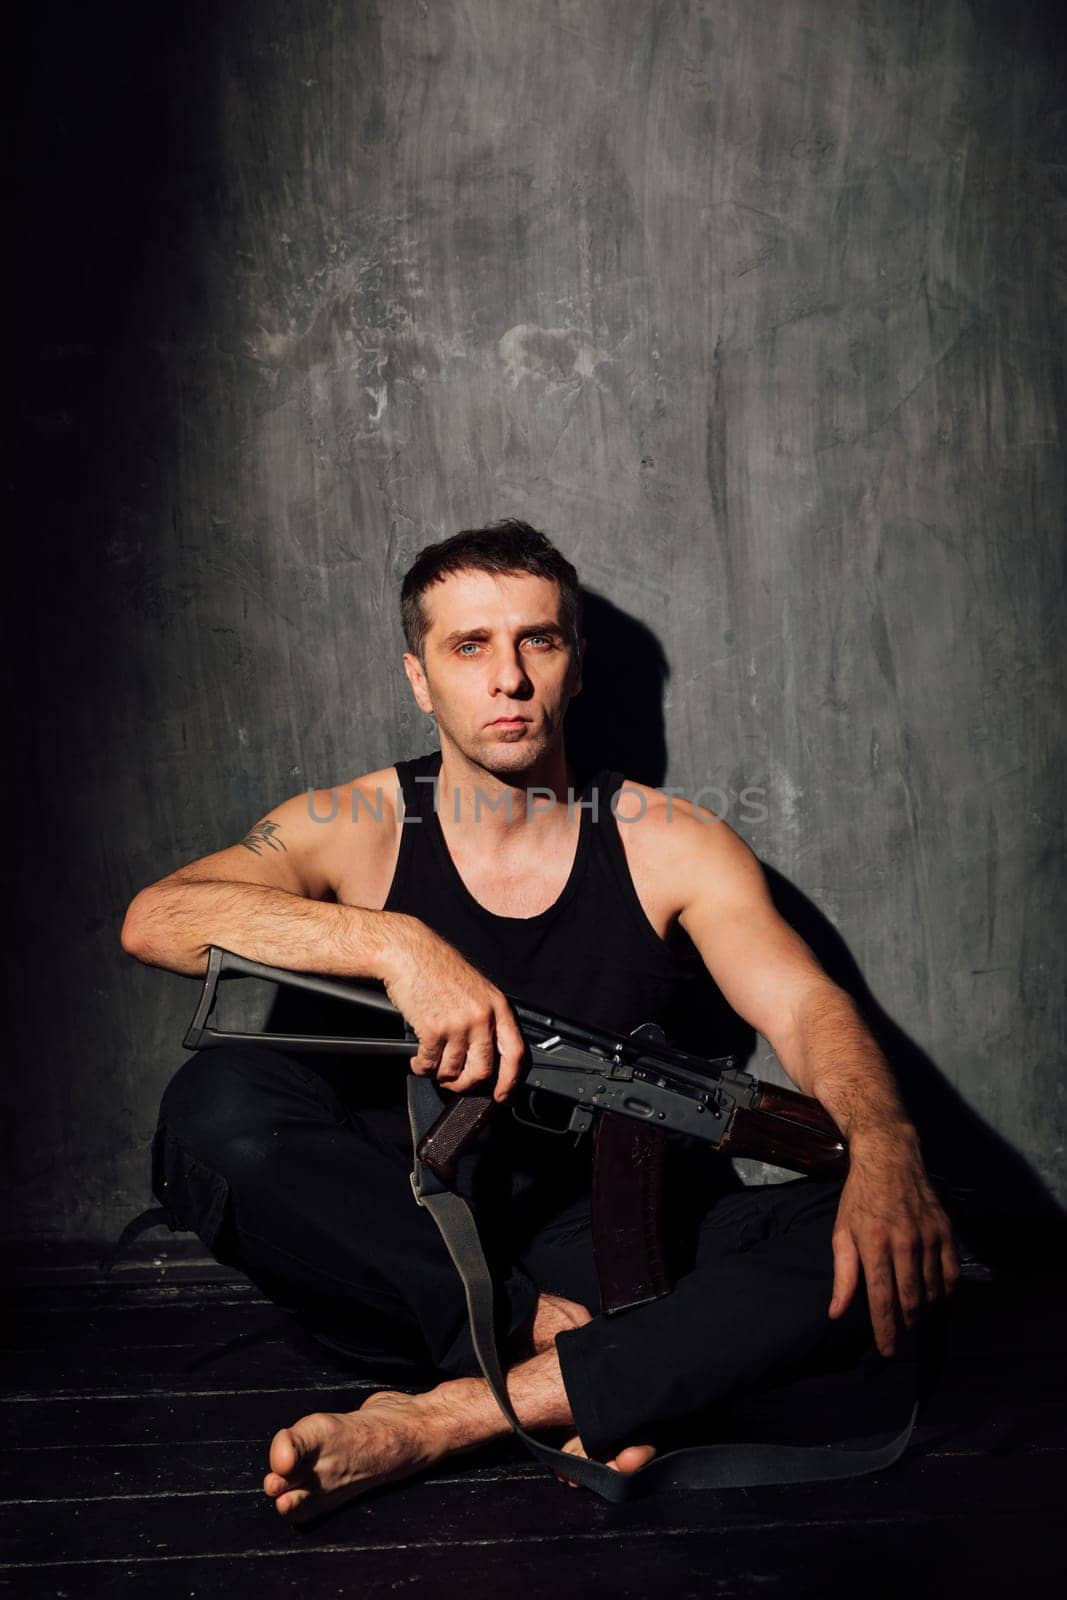 A man with a machine gun on a black background in a dark room by Simakov